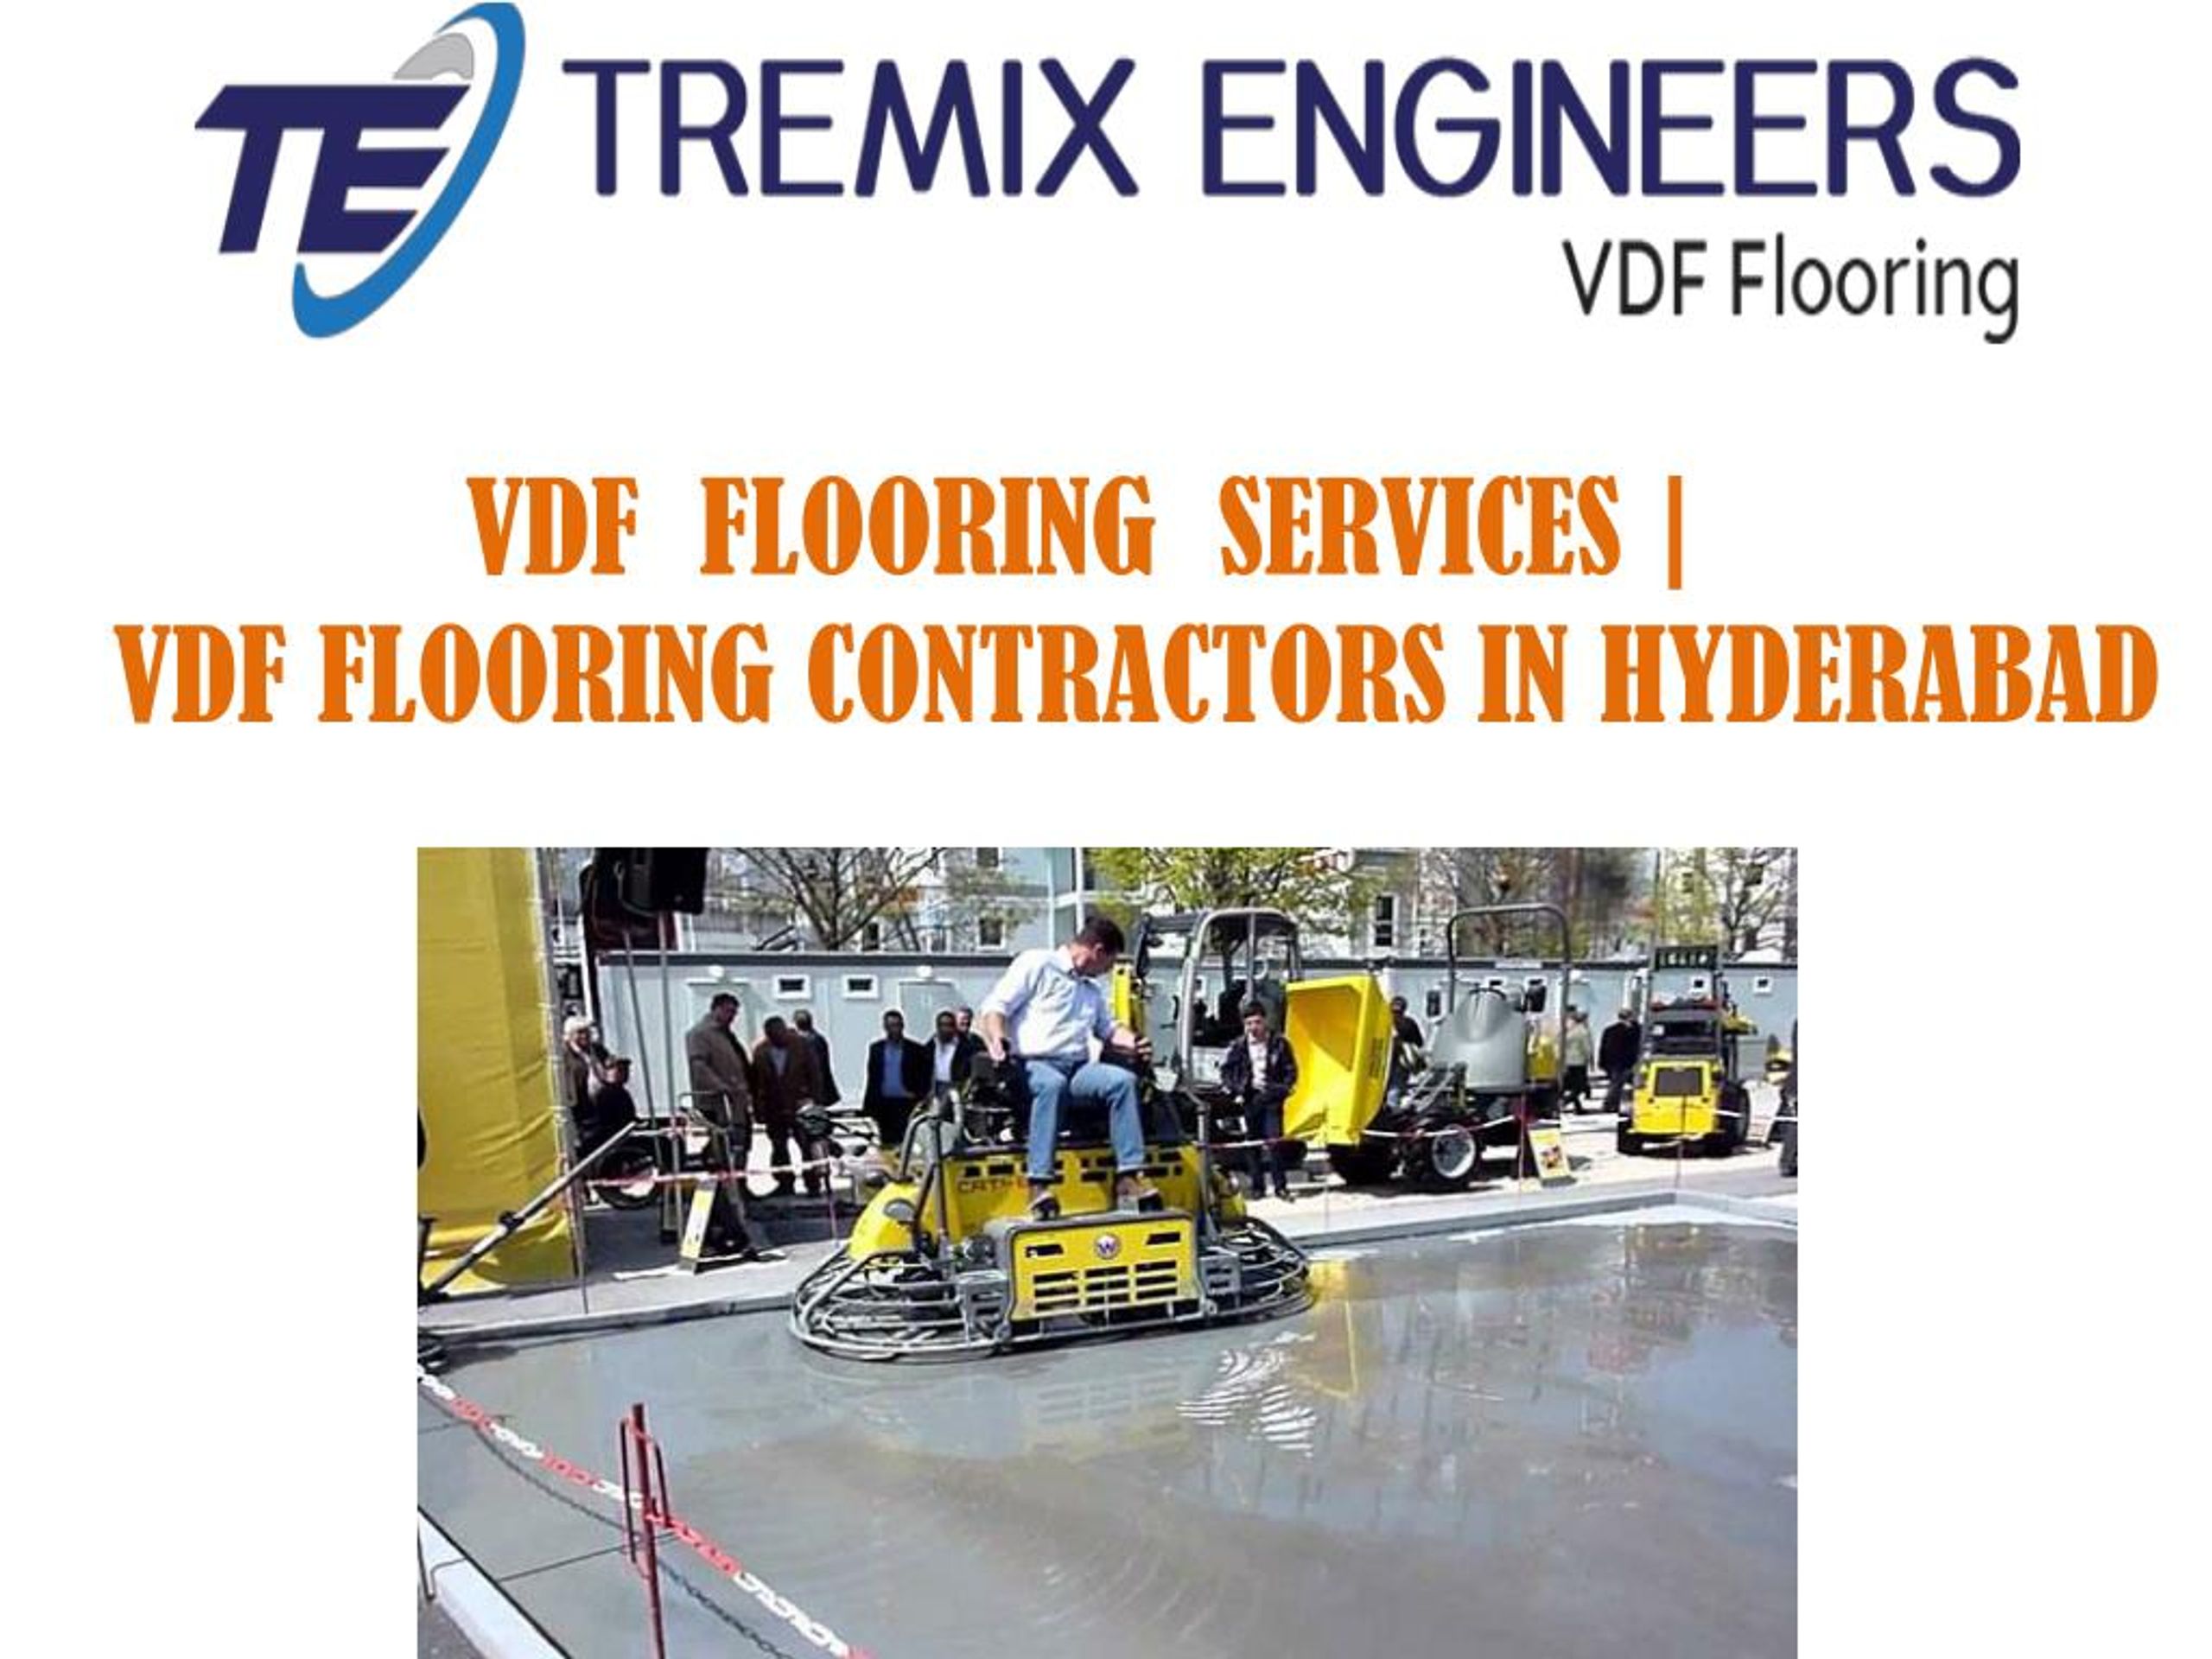 Ppt Vdf Flooring Services Vdf Flooring Contractors In Hyderabad Powerpoint Presentation Id 7682324